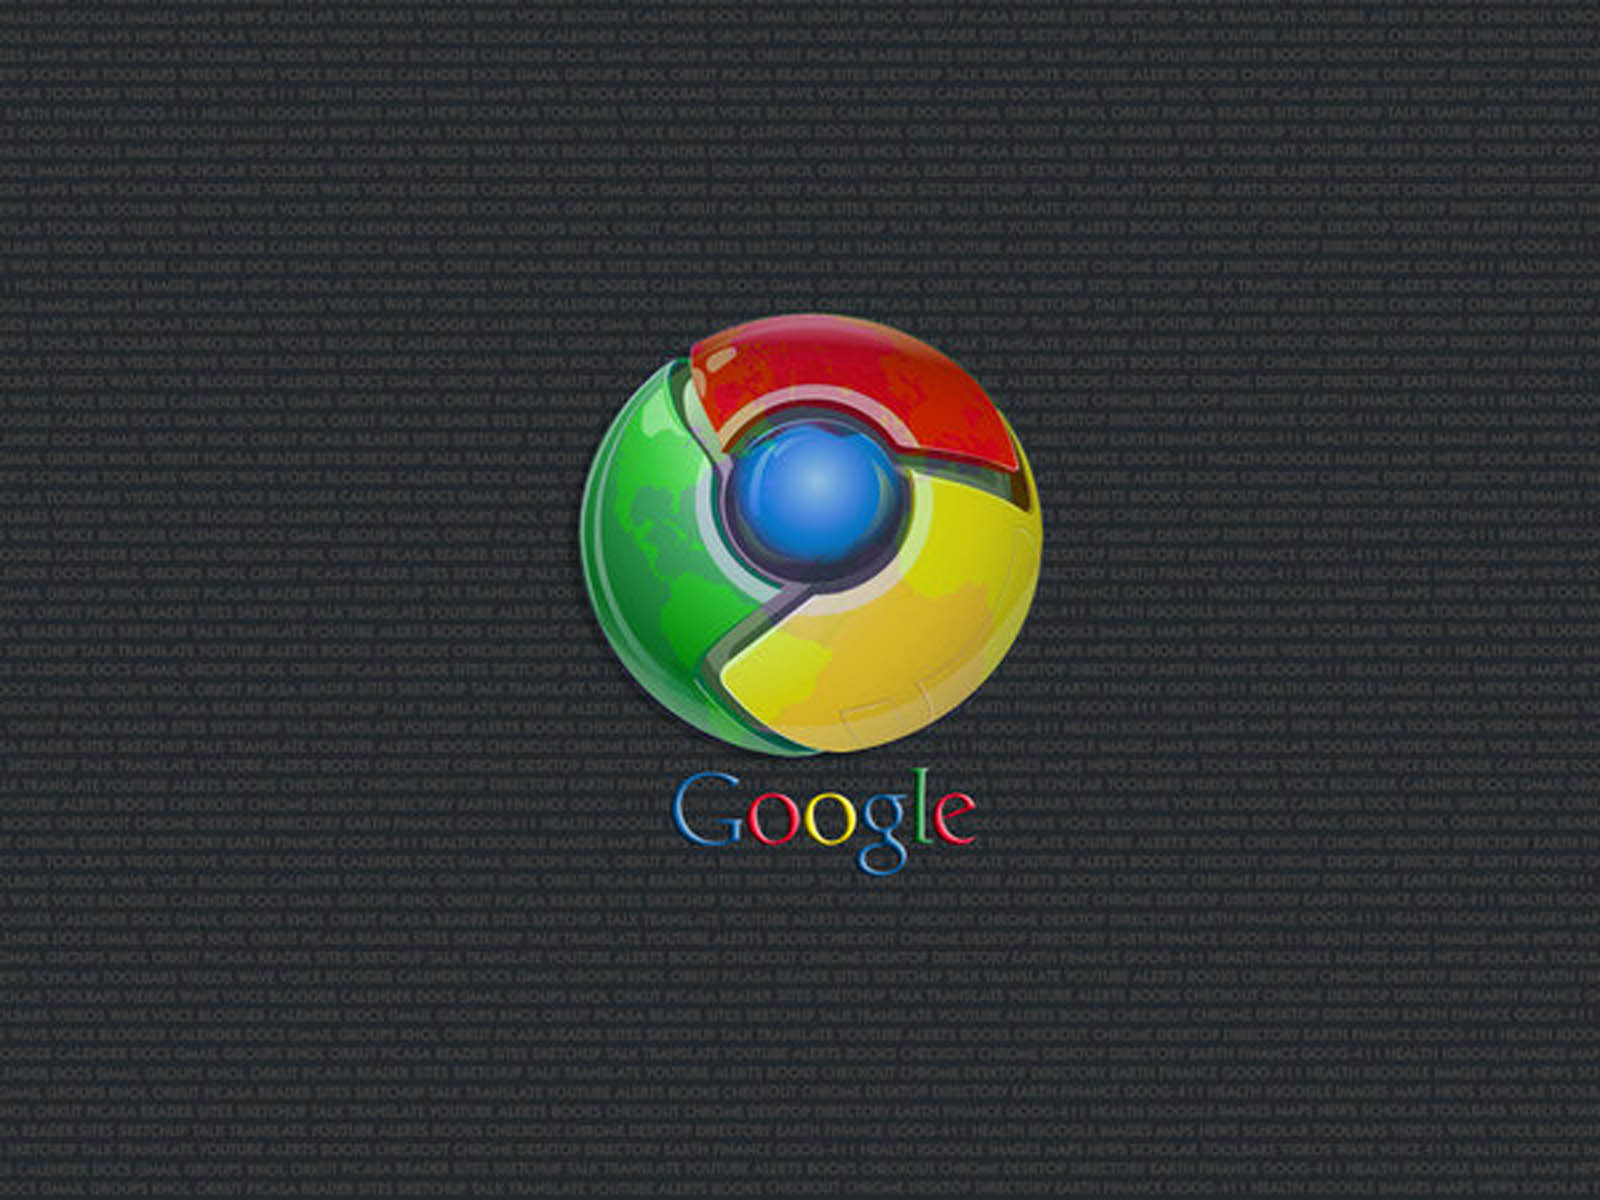 [49+] Google Chrome Wallpapers for Free | WallpaperSafari.com